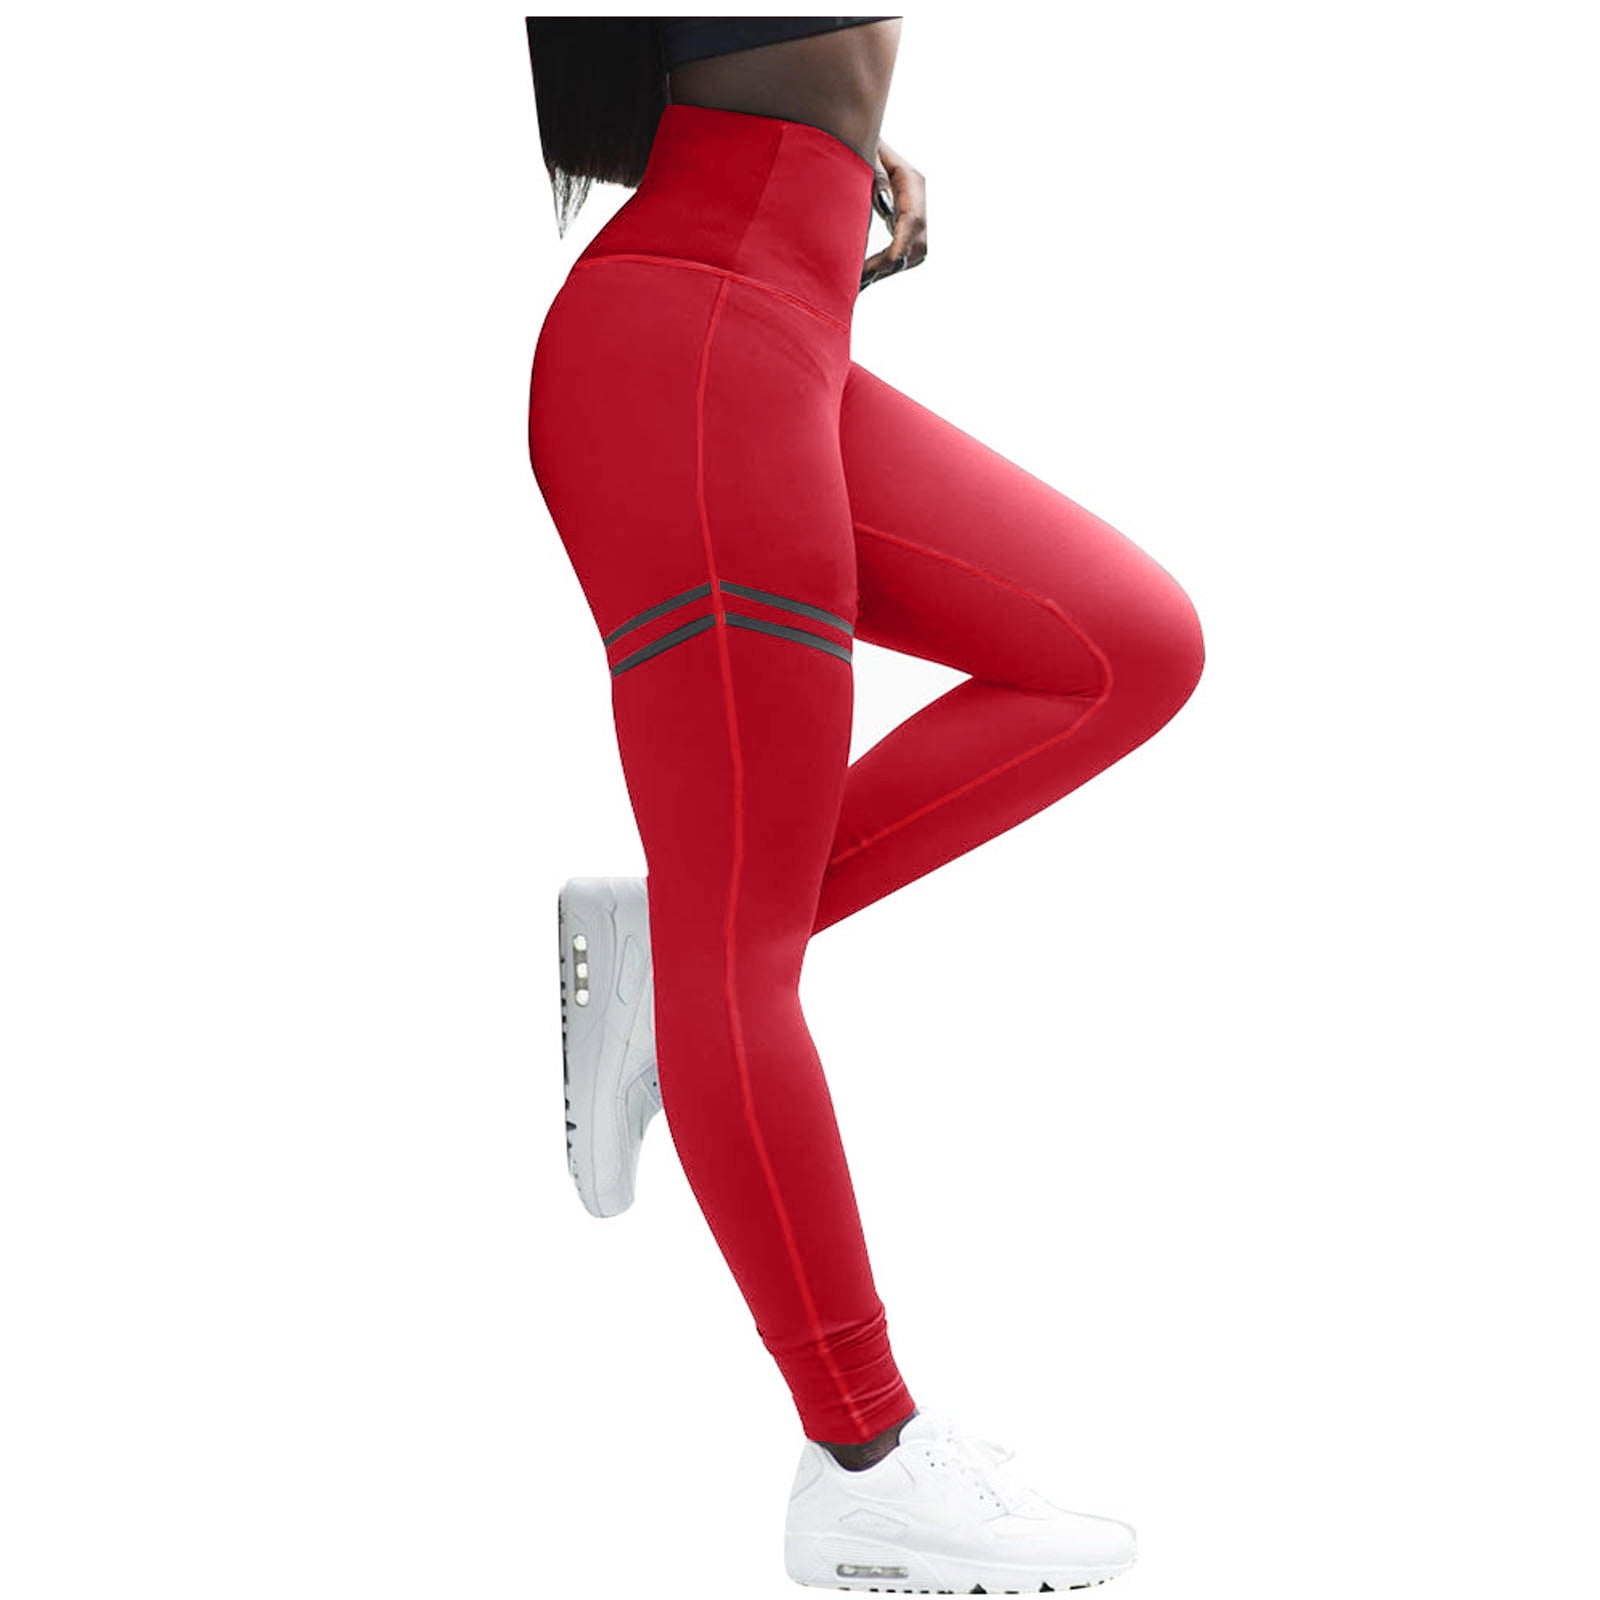 HAPIMO Sales Women's Yoga Pants Hip Lift Tights Tummy Control